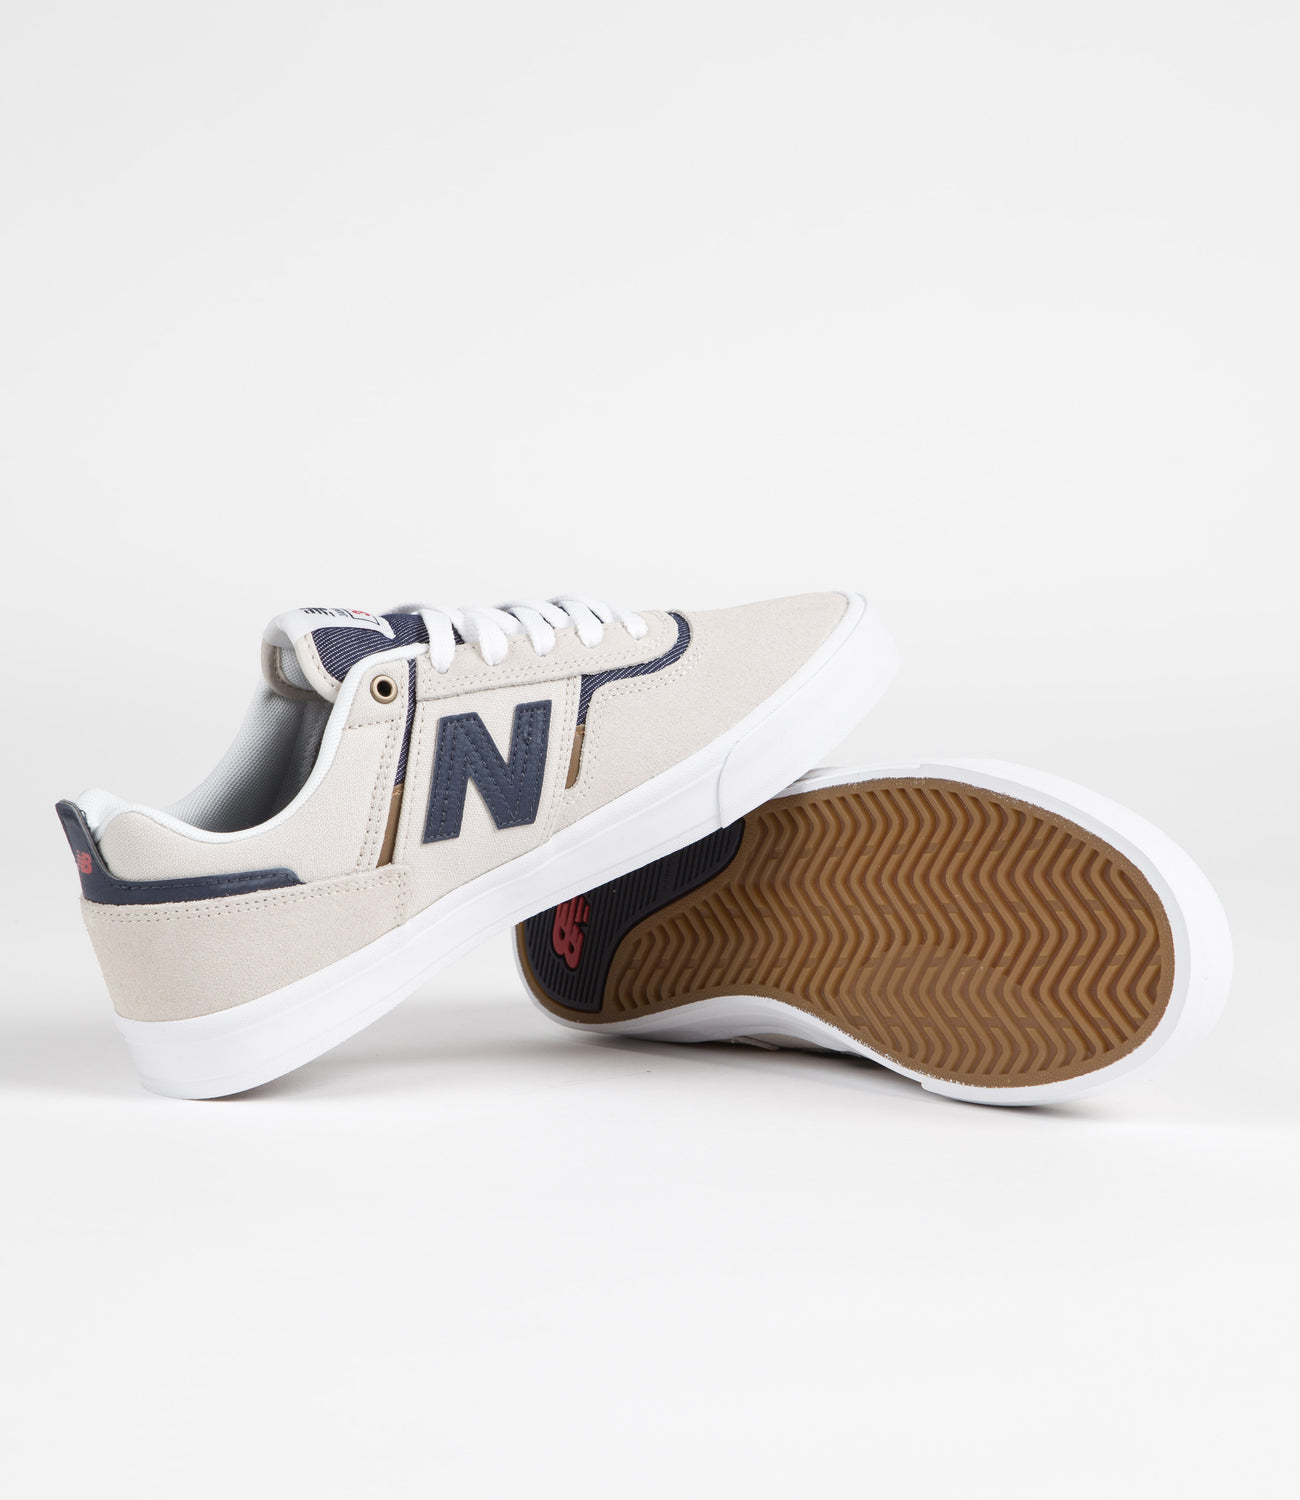 New Balance Numeric 306 Jamie Foy Navy & White Skate Shoes